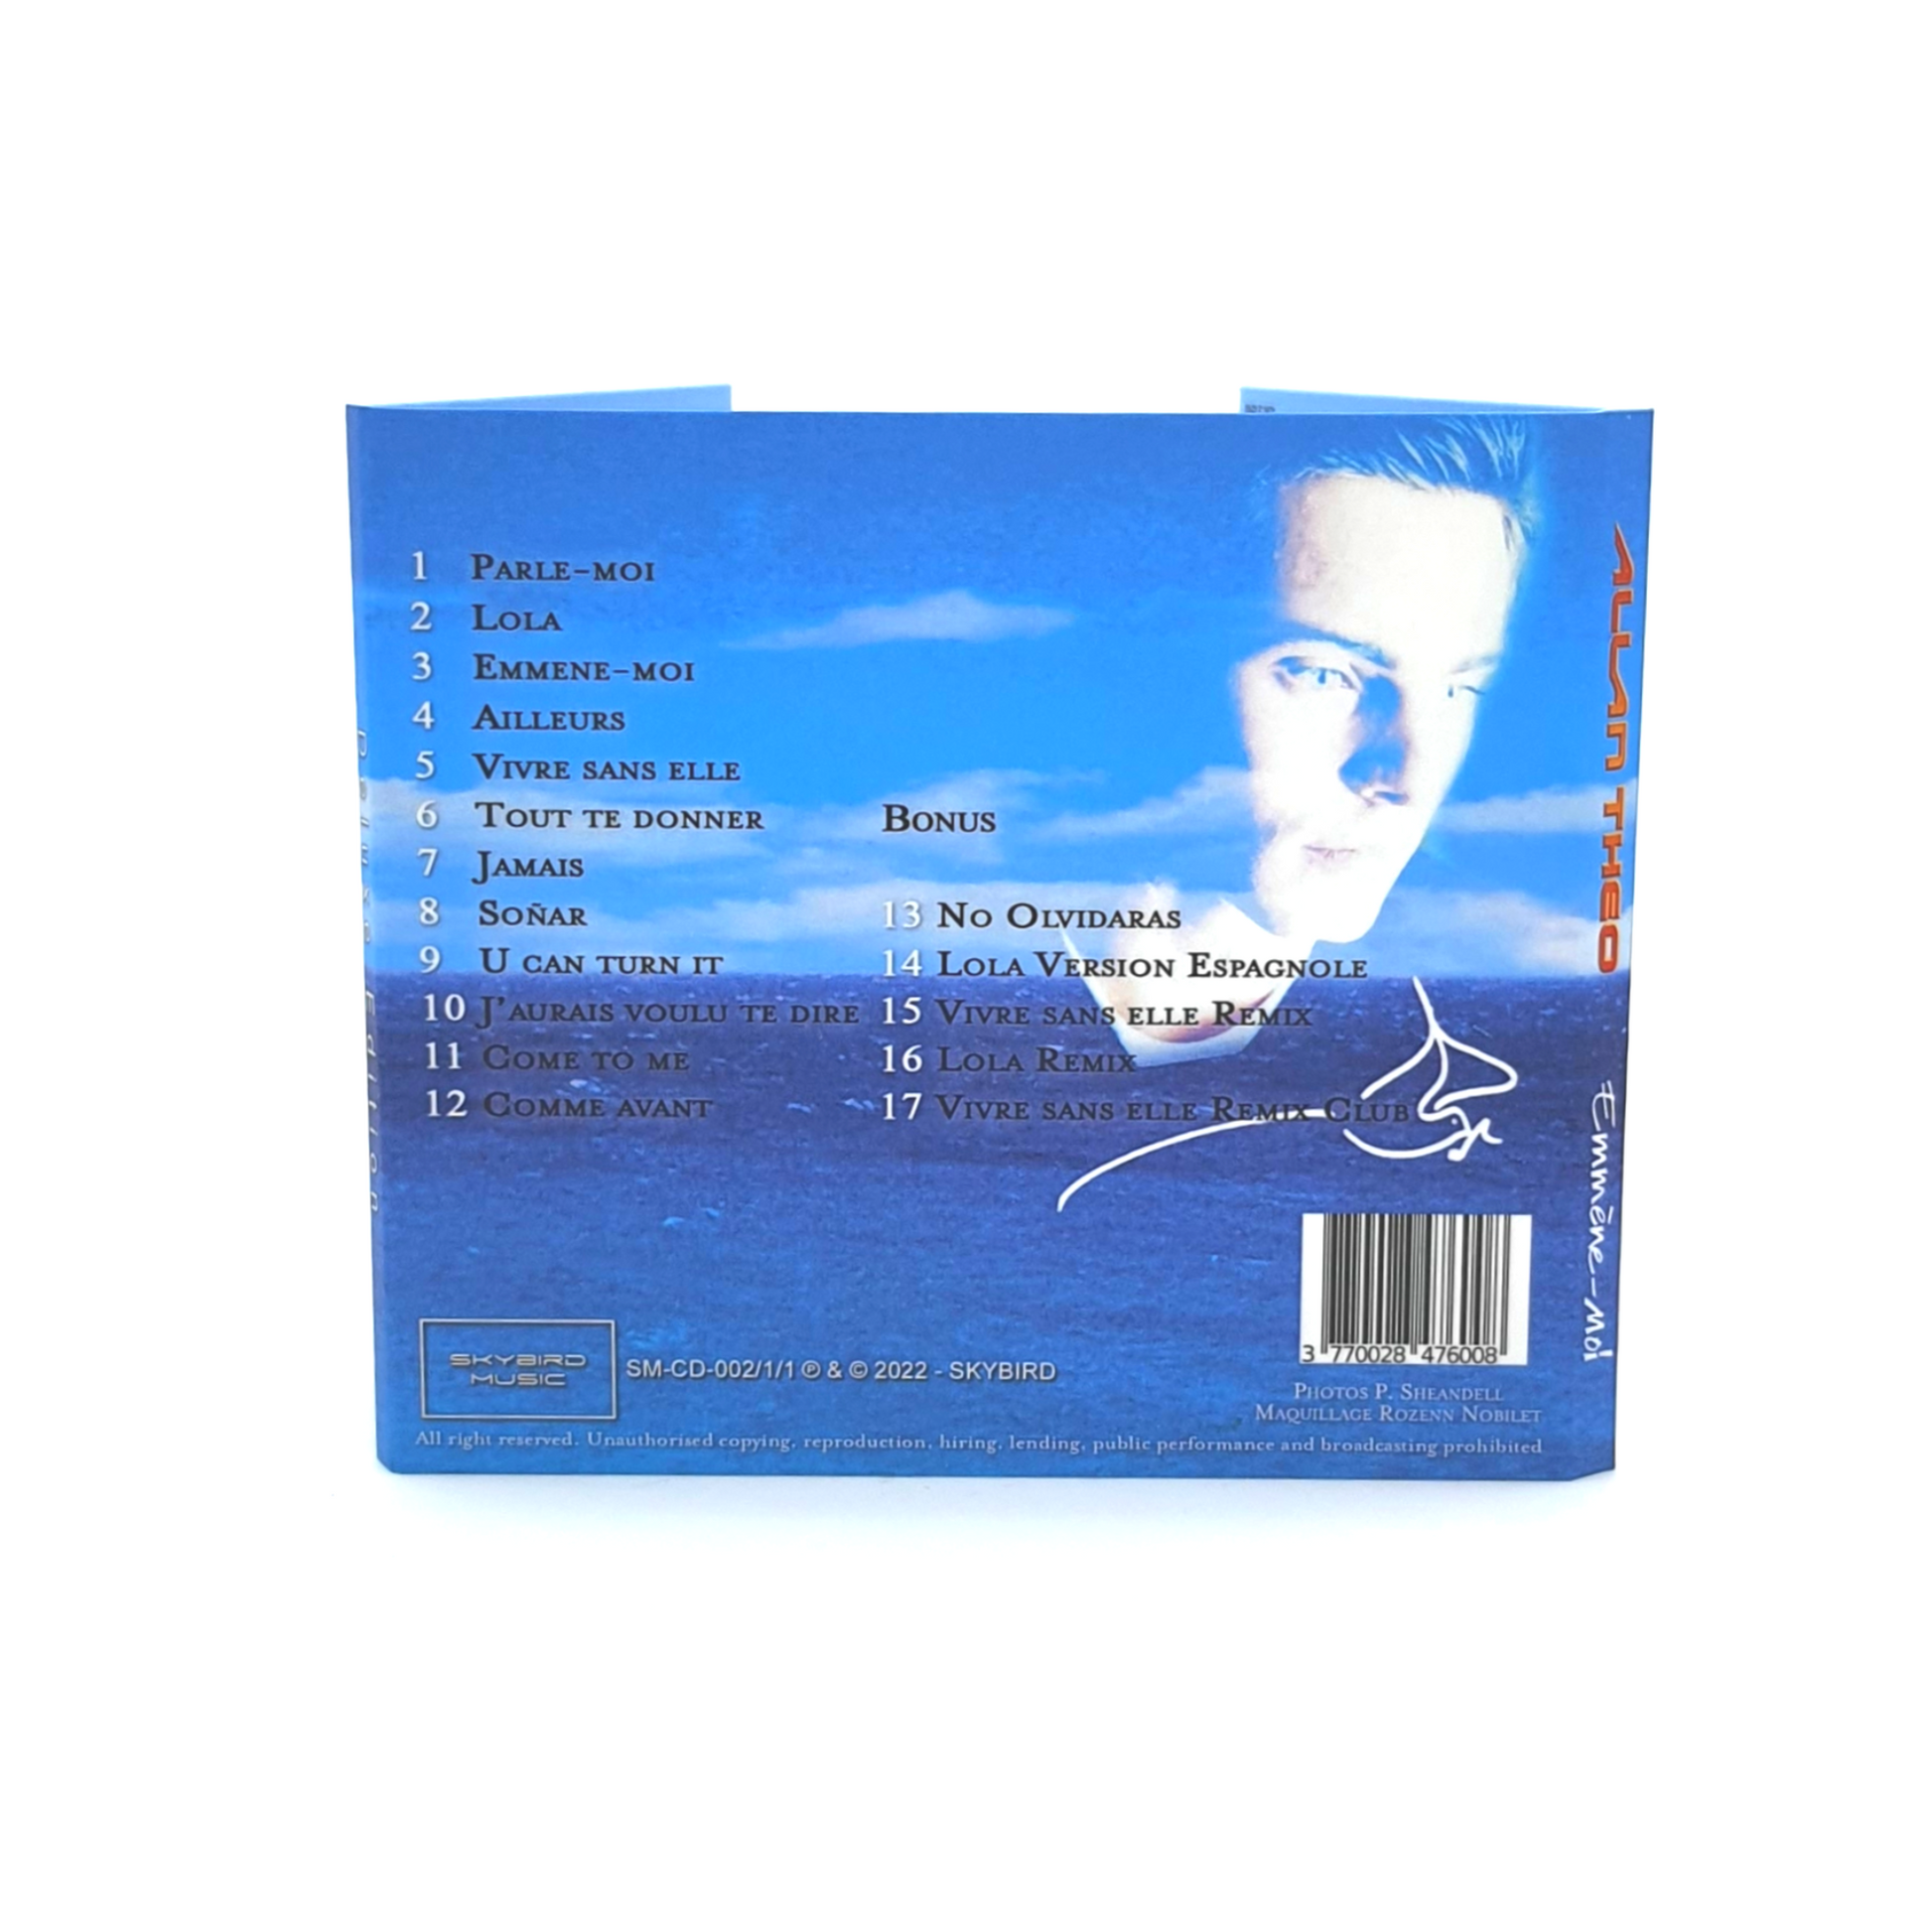 1998 RÉÉDITION CD - 10,99 €